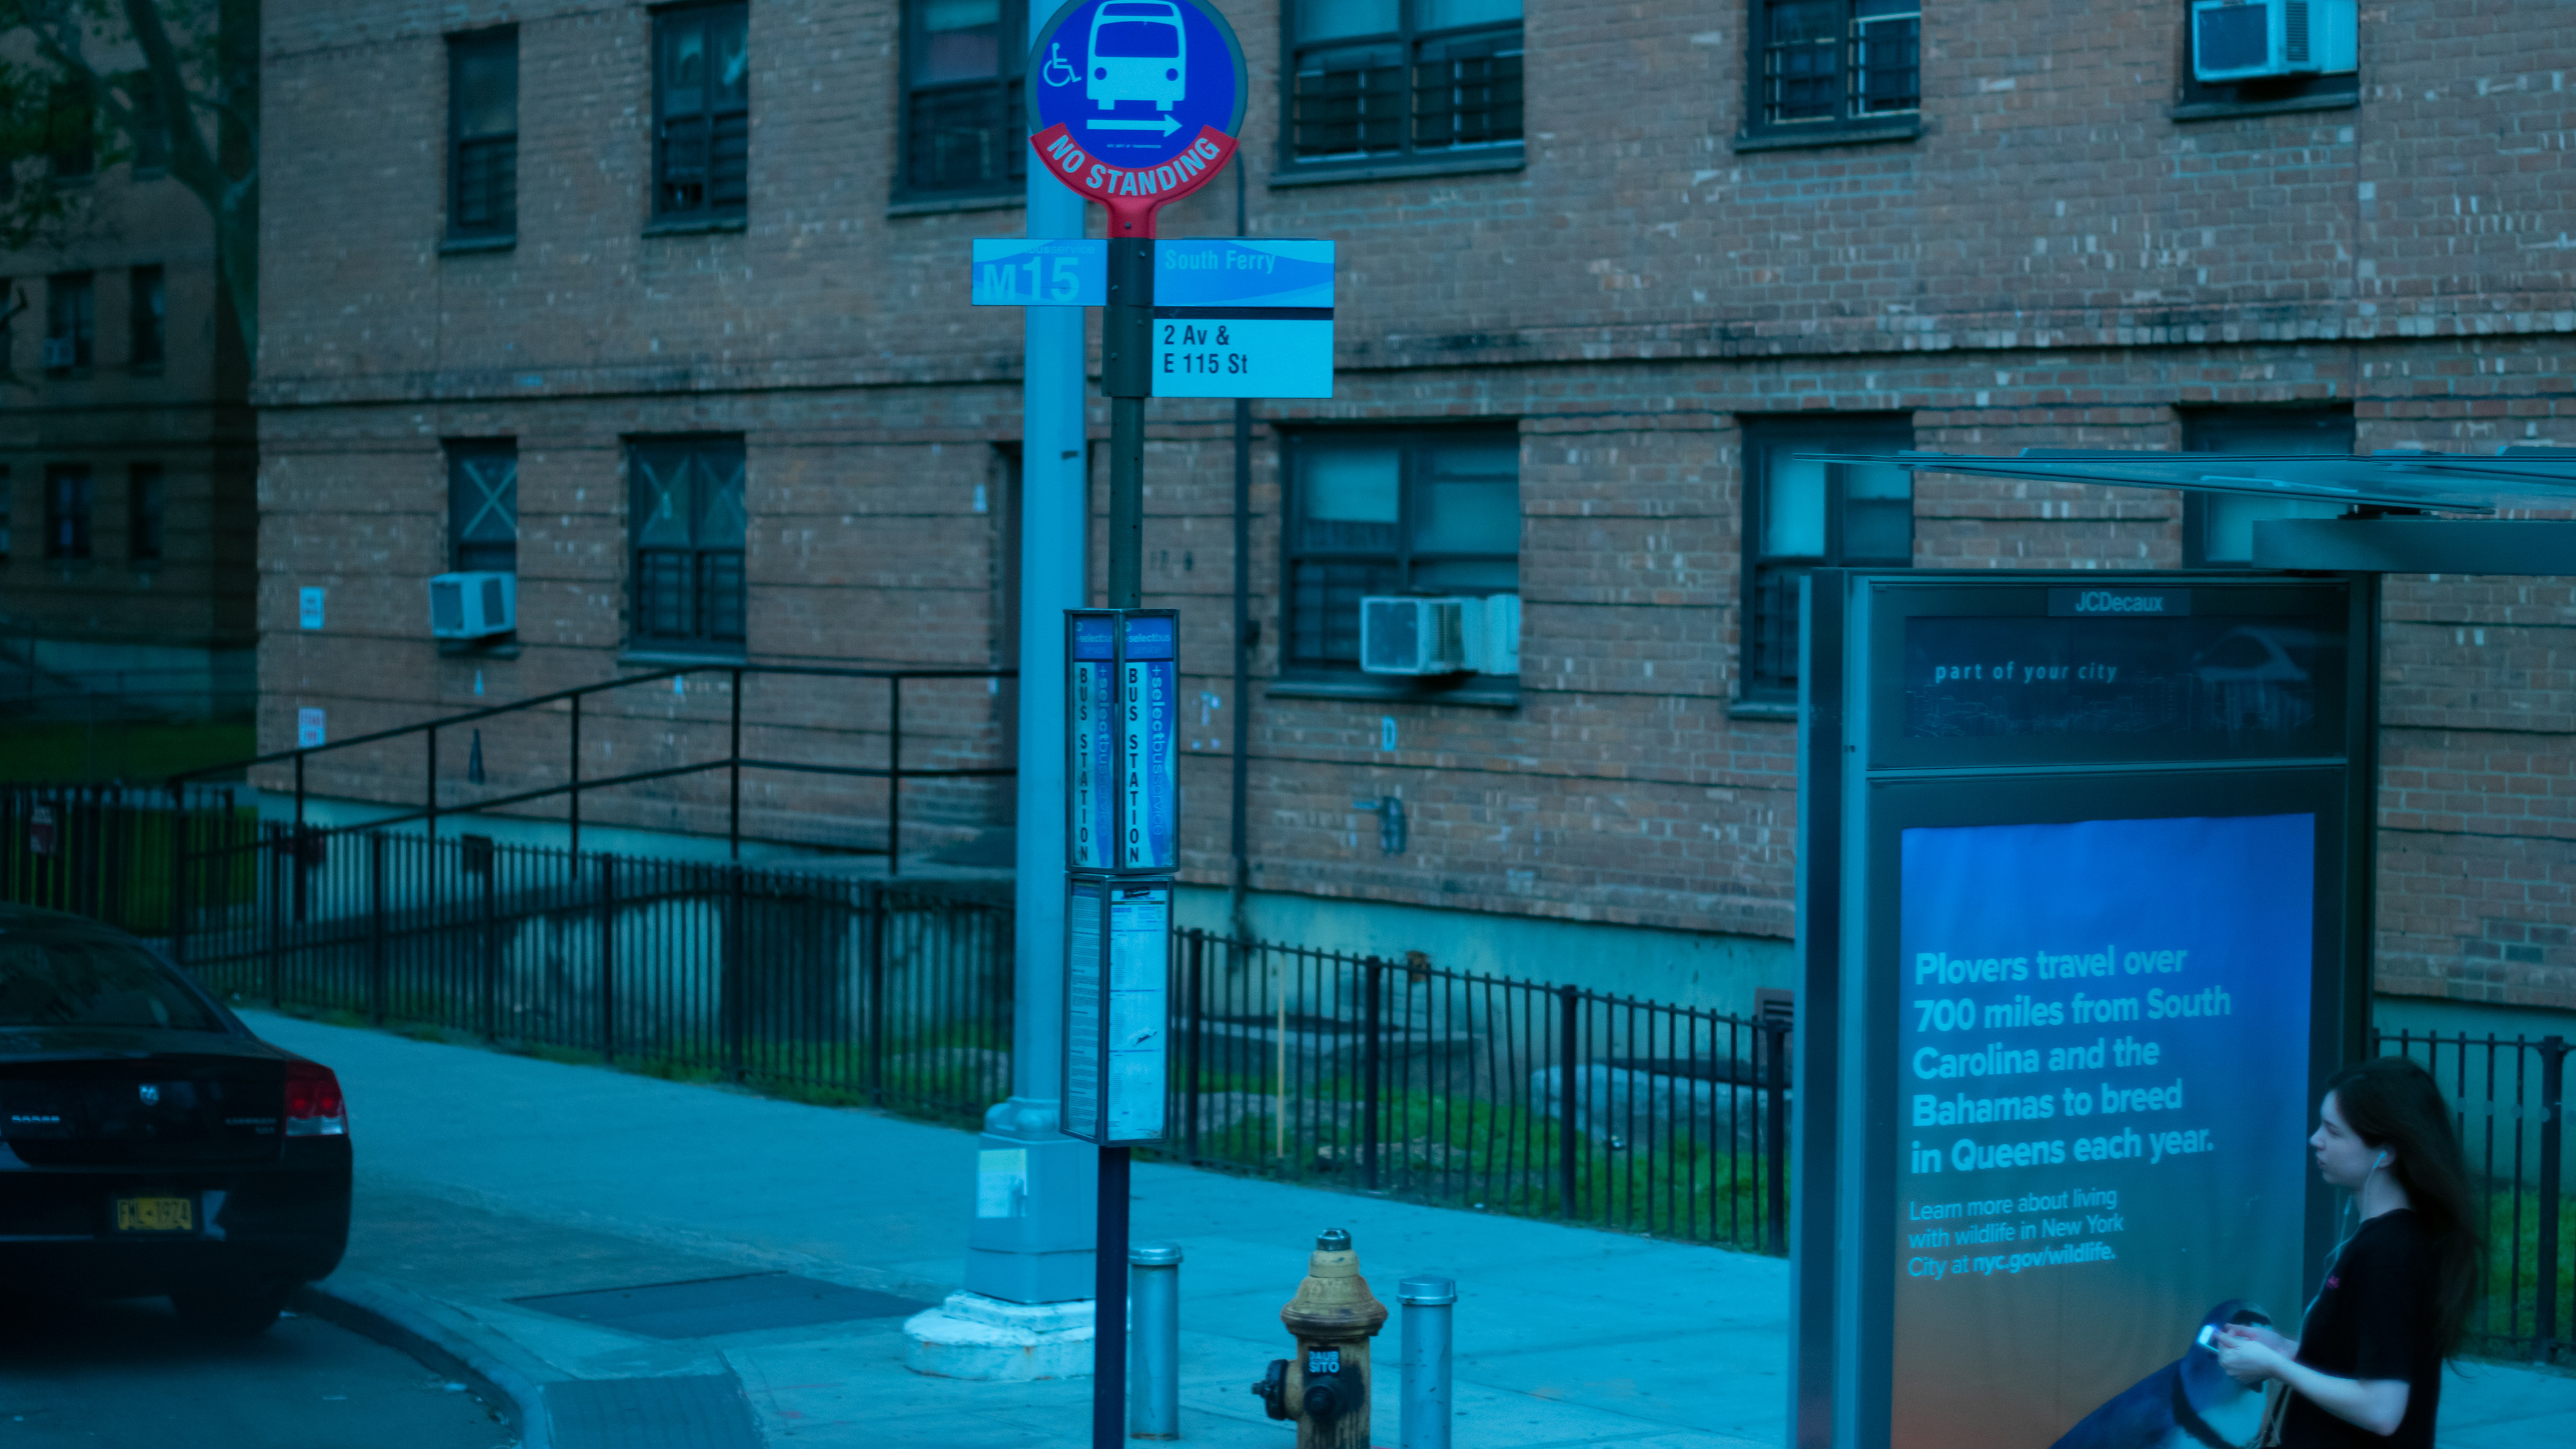 People 3840x2160 bus stop New York City road sign fire hydrants bricks handrail sidewalks headphones sign